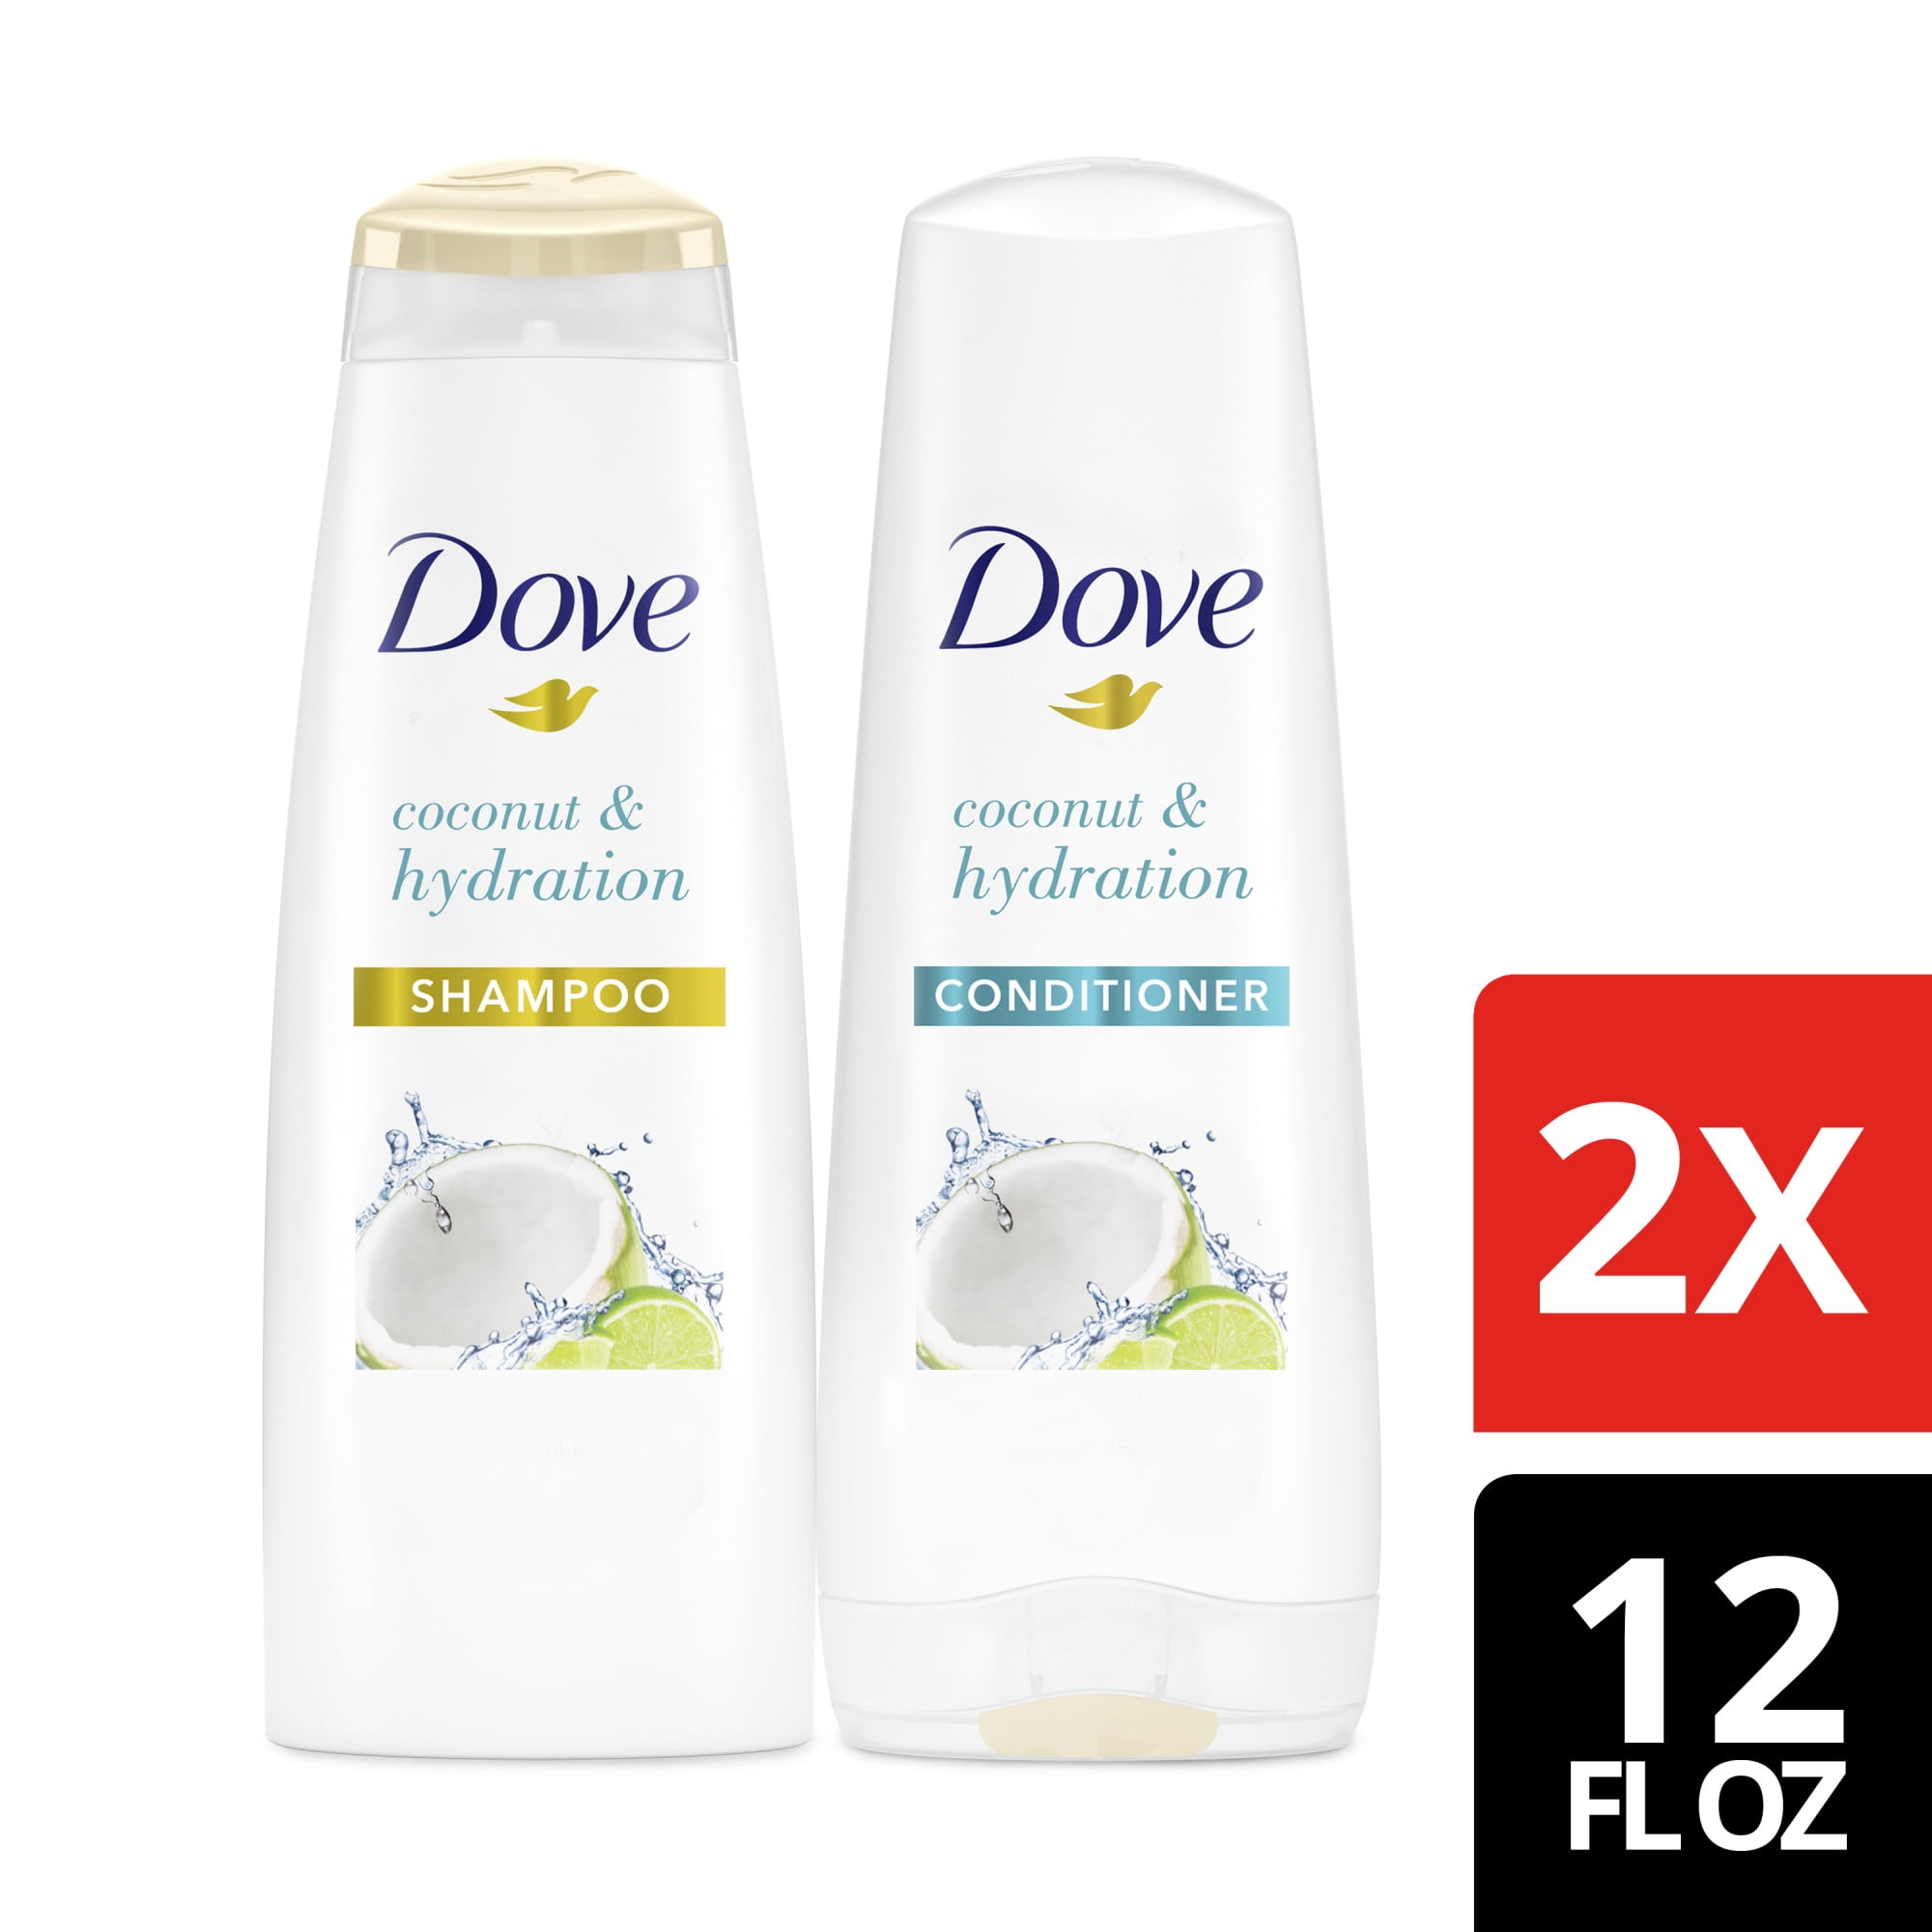 Dove Nourishing Secrets Coconut & Hydration Shampoo and Conditioner, 12 oz, 2 count